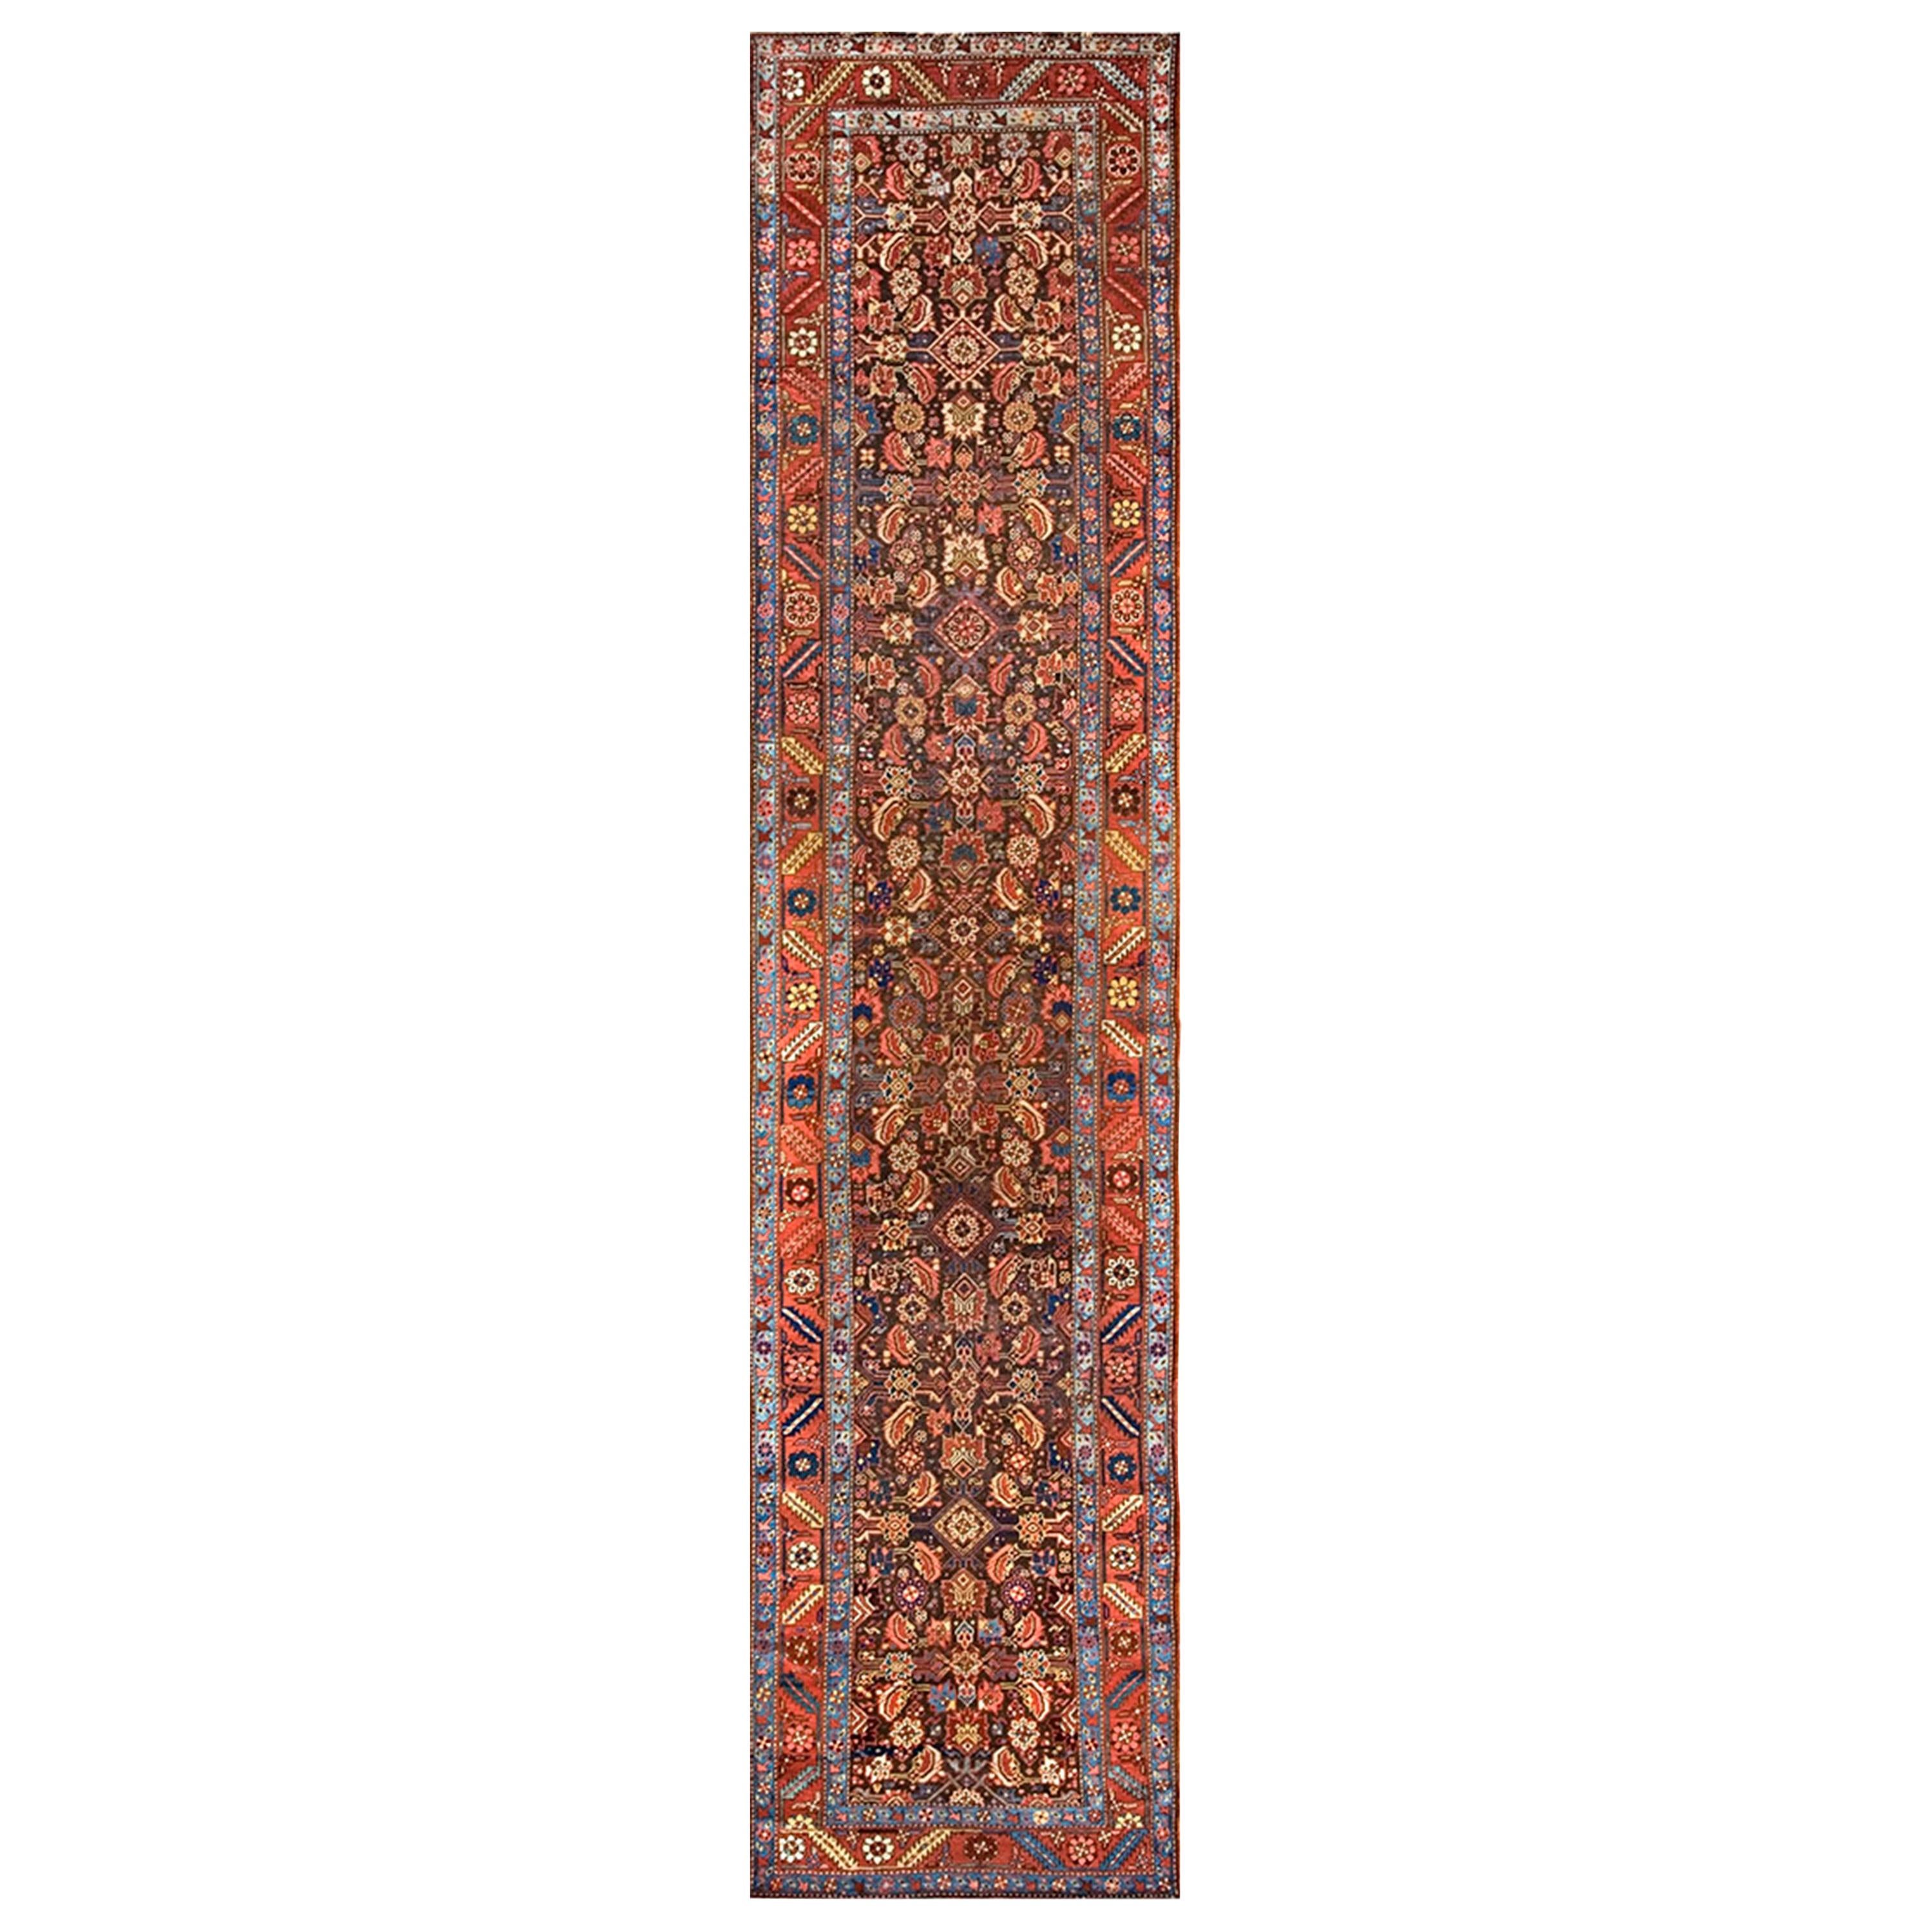 19th Century N.W. Persian Bakshaiesh Runner Carpet ( 3'5" x 14'3" - 104 x 434 ) For Sale